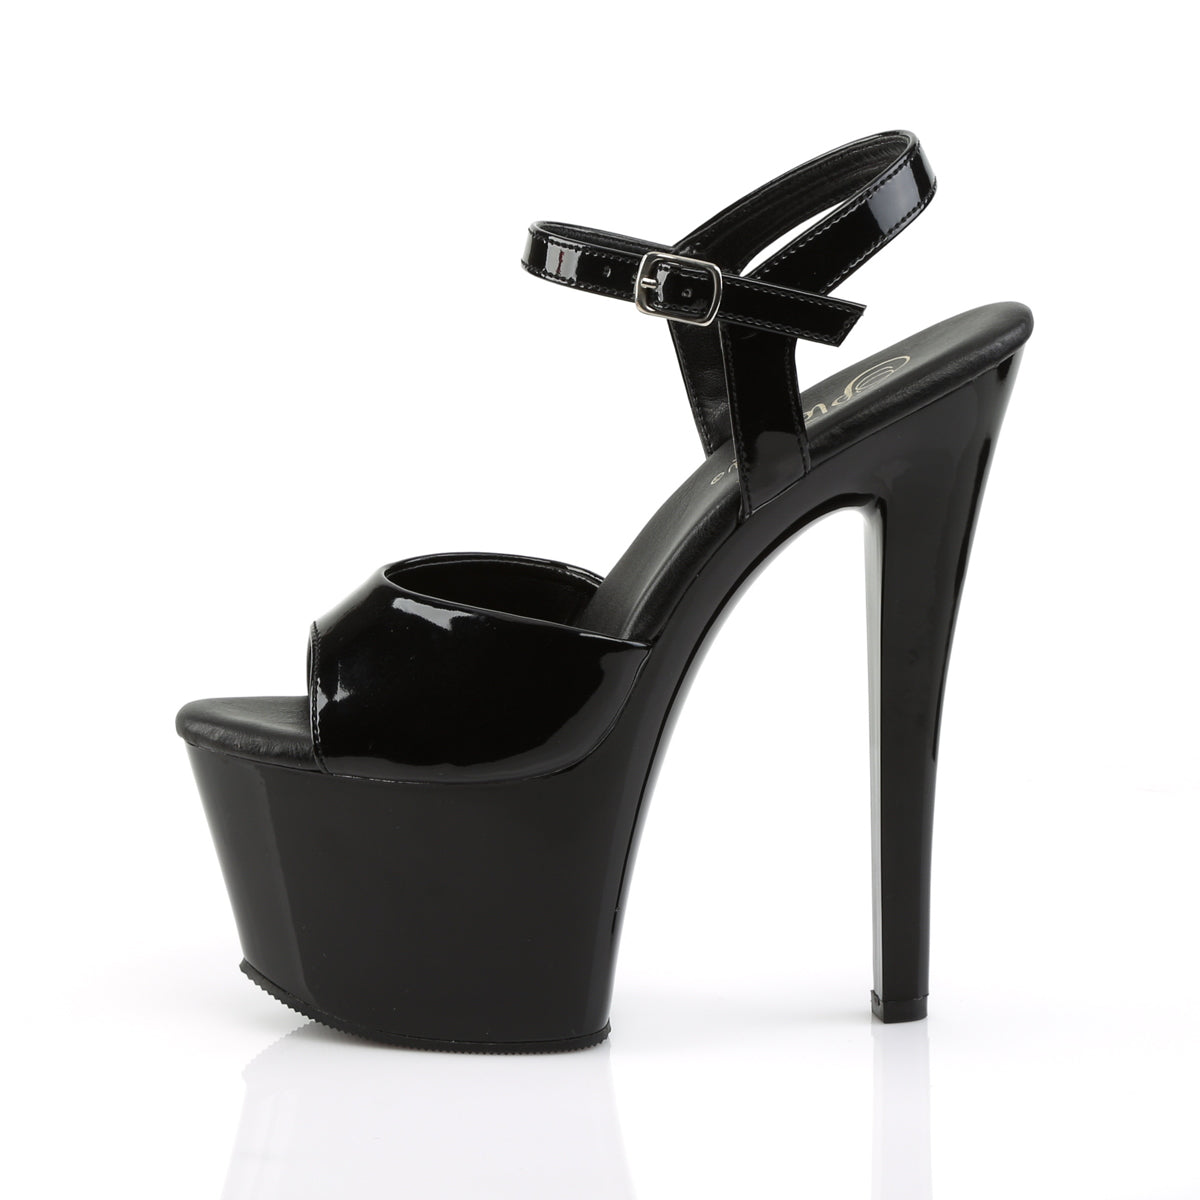 SKY-309VL Pleaser 7" Heel Black Patent Pole Dancing Platform-Pleaser- Sexy Shoes Pole Dance Heels